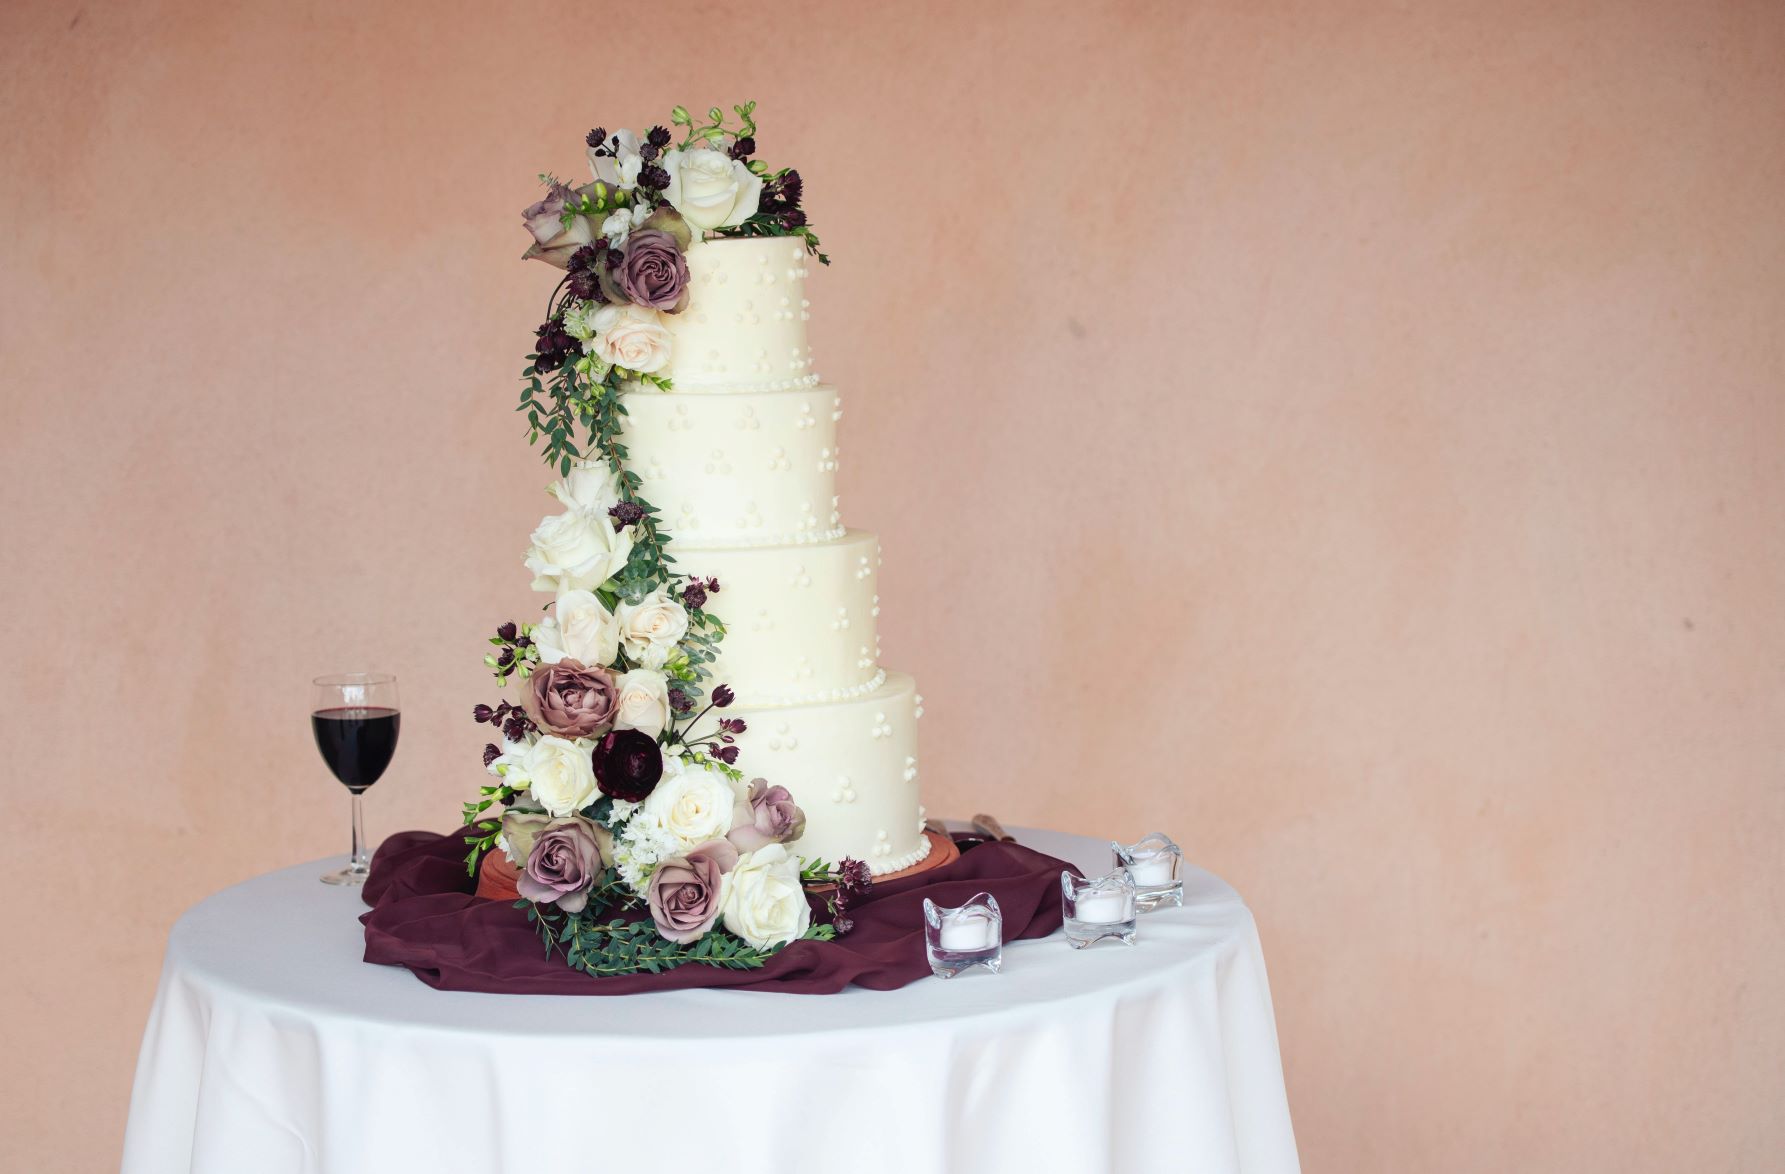 A 4-tier wedding cake